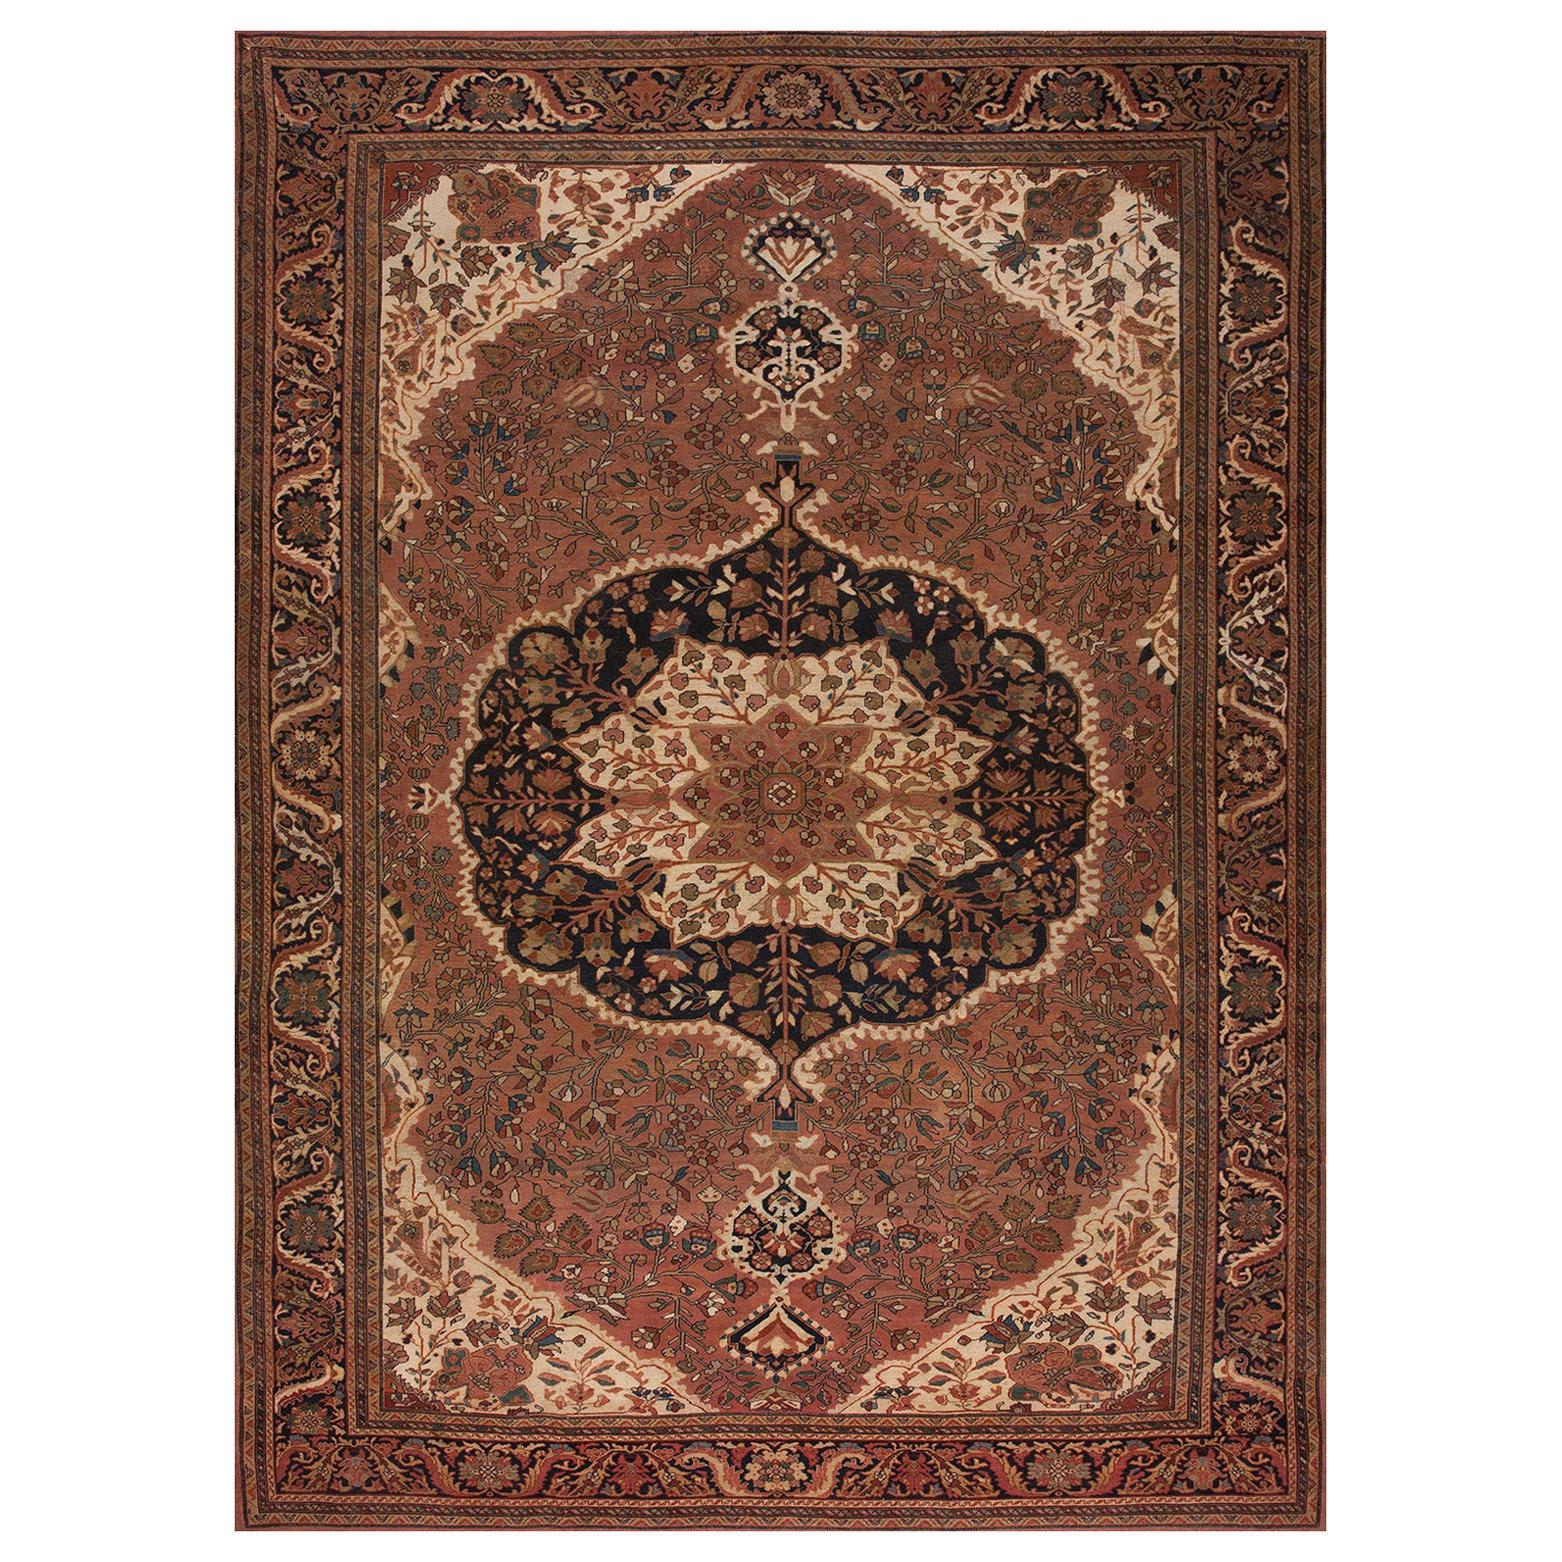 Early 20th Century Persian Sarouk Farahan Carpet ( 9'3" x 13'2" - 282 x 401 ) For Sale